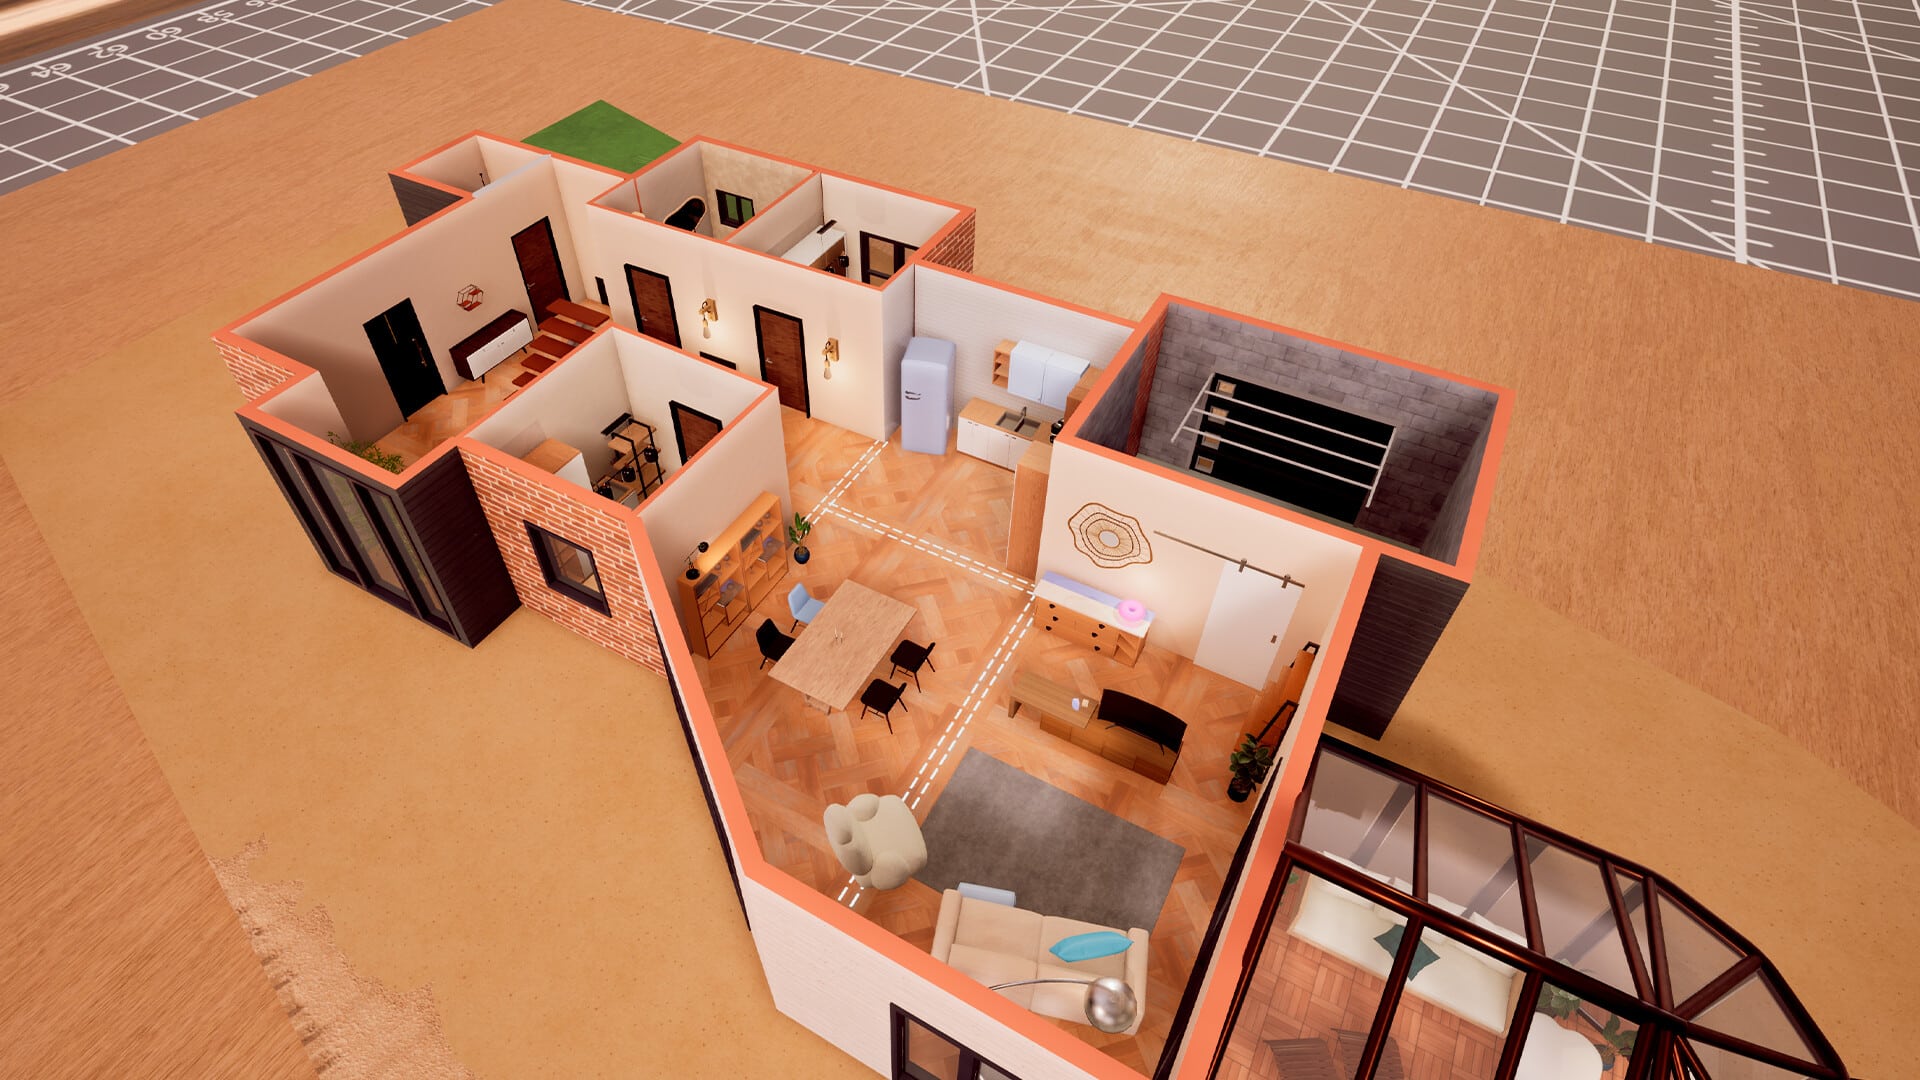 Architect life a house design simulator screenshot 04 4